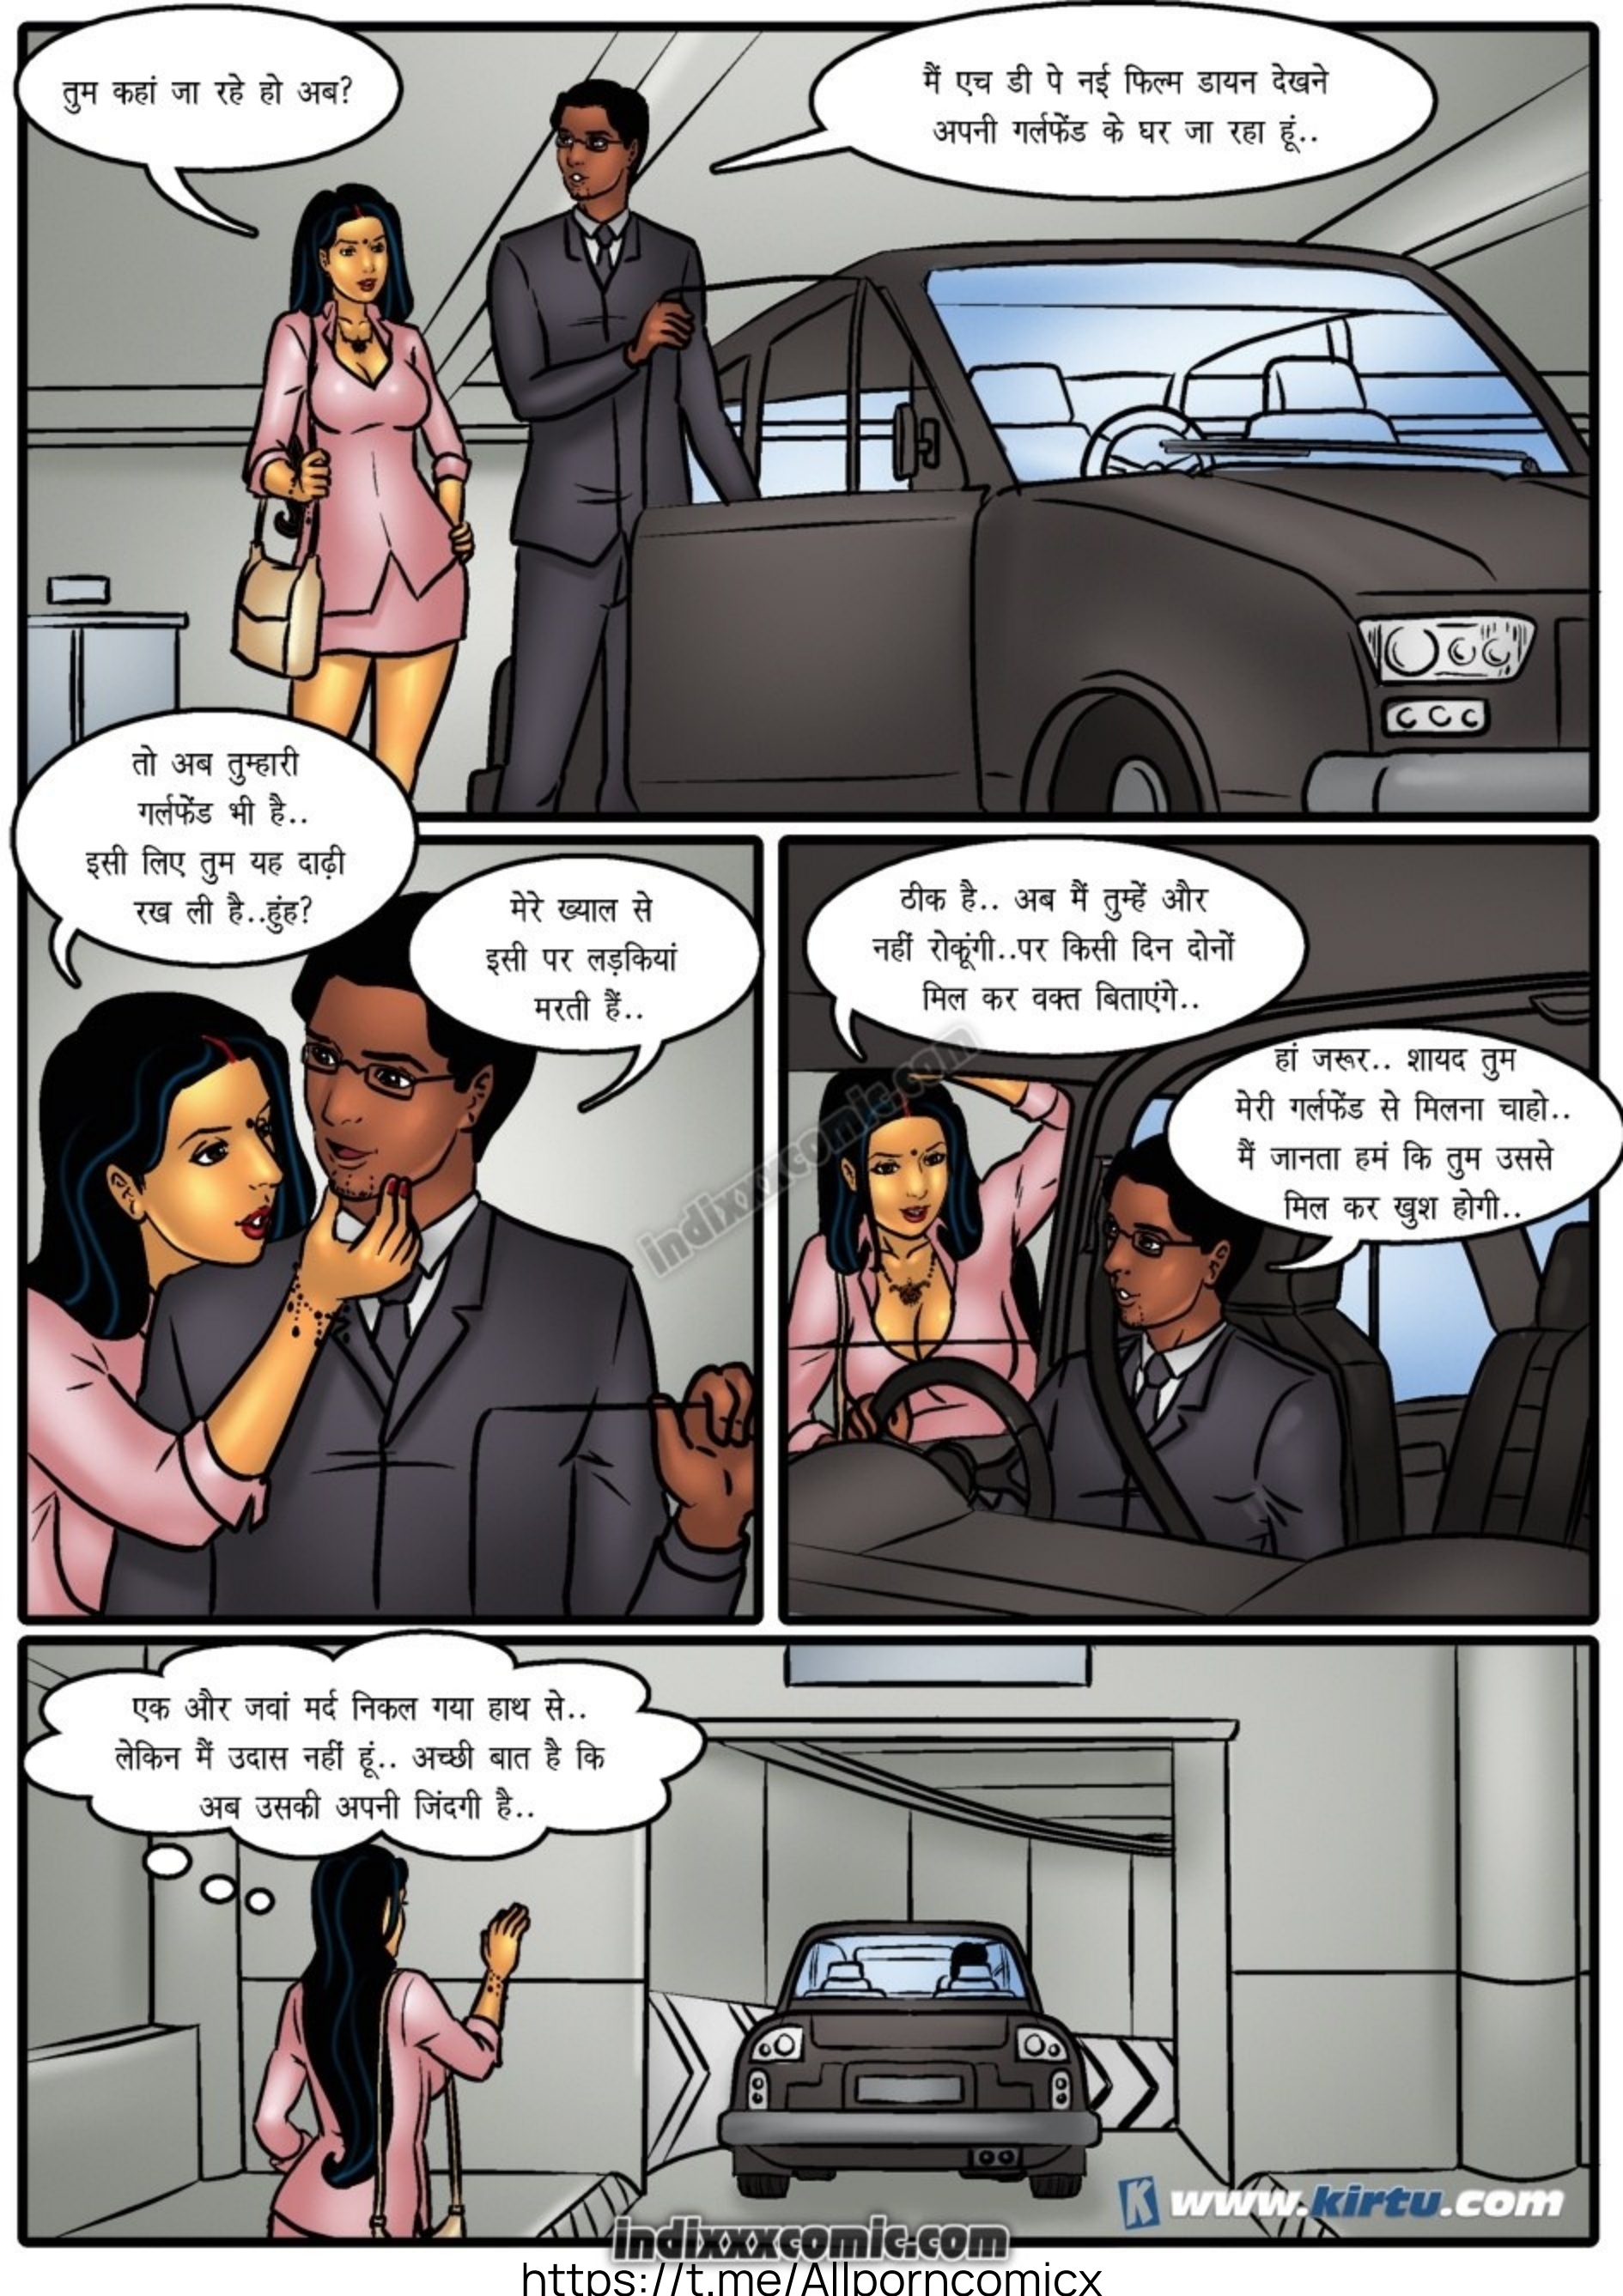 porn comics, Allporncomics, savita bhabhi free comics, savita bhabhi hindi comics...